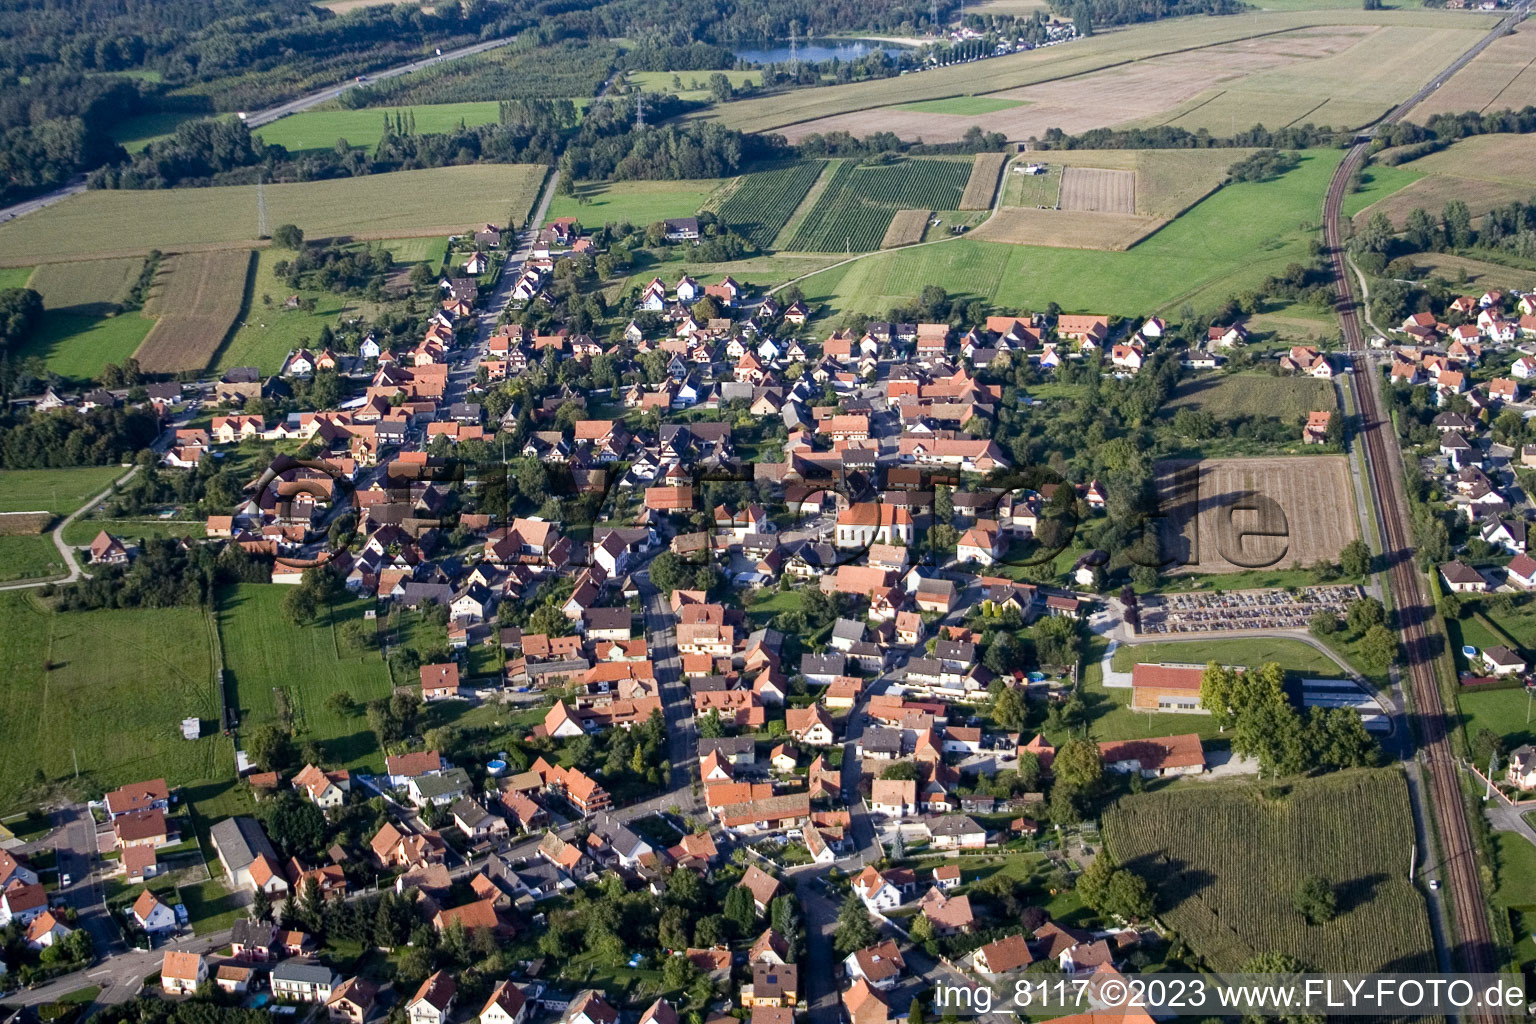 Rountzenheim in the state Bas-Rhin, France from a drone